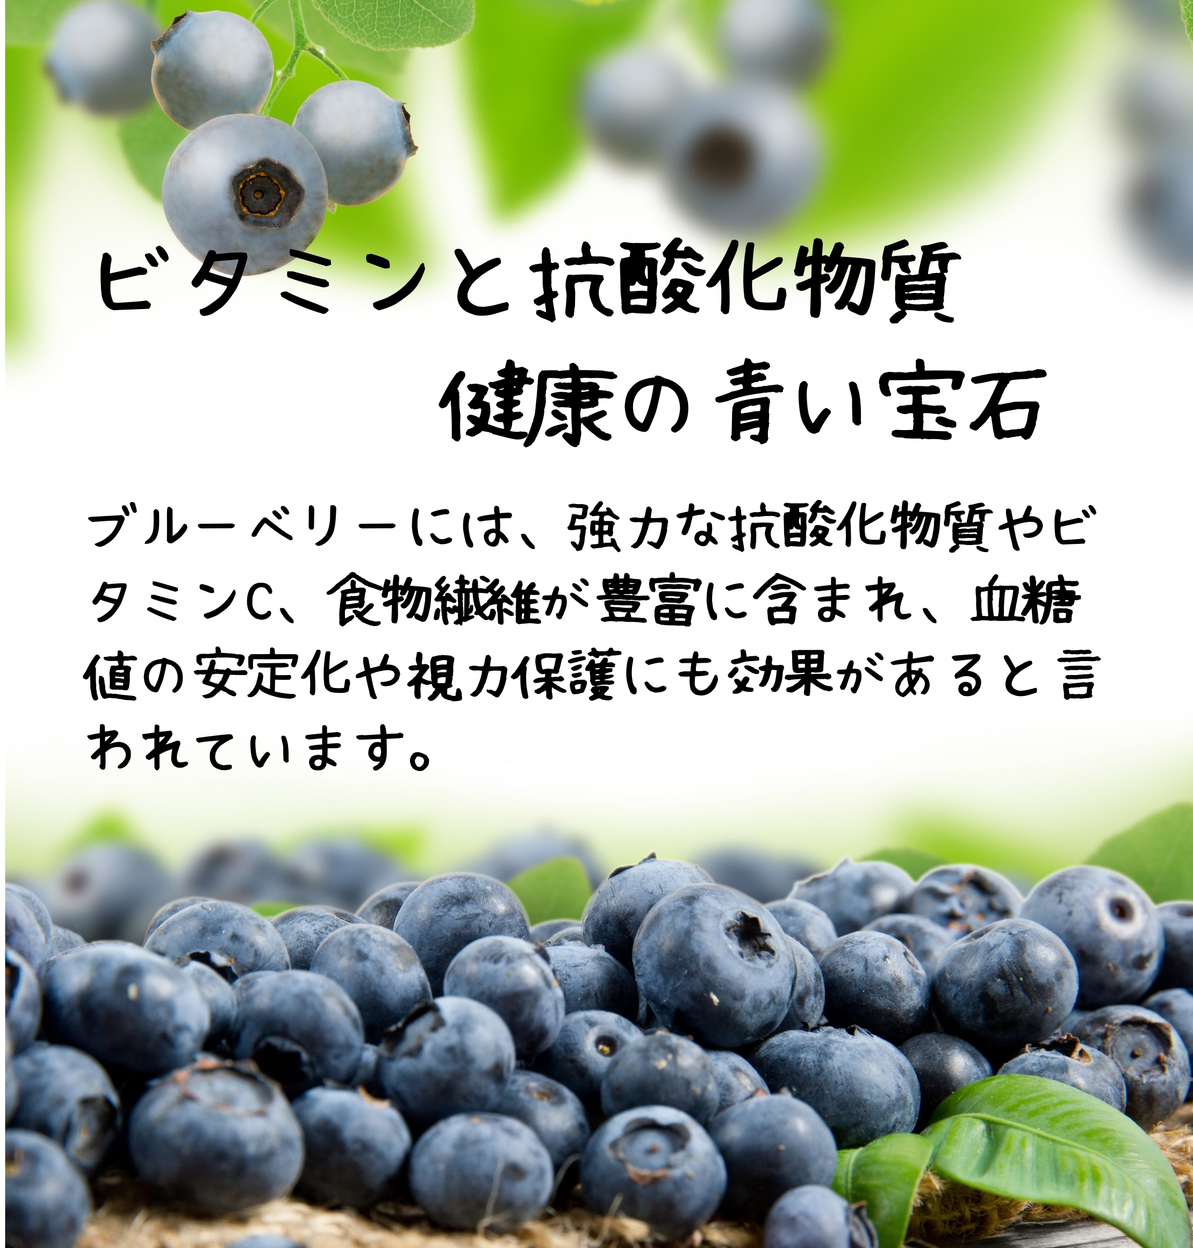  no addition freezing blueberry 1kg pack freezing . fruit Hokkaido agriculture . direct delivery Berry Berry farm Honda Hakodate city 